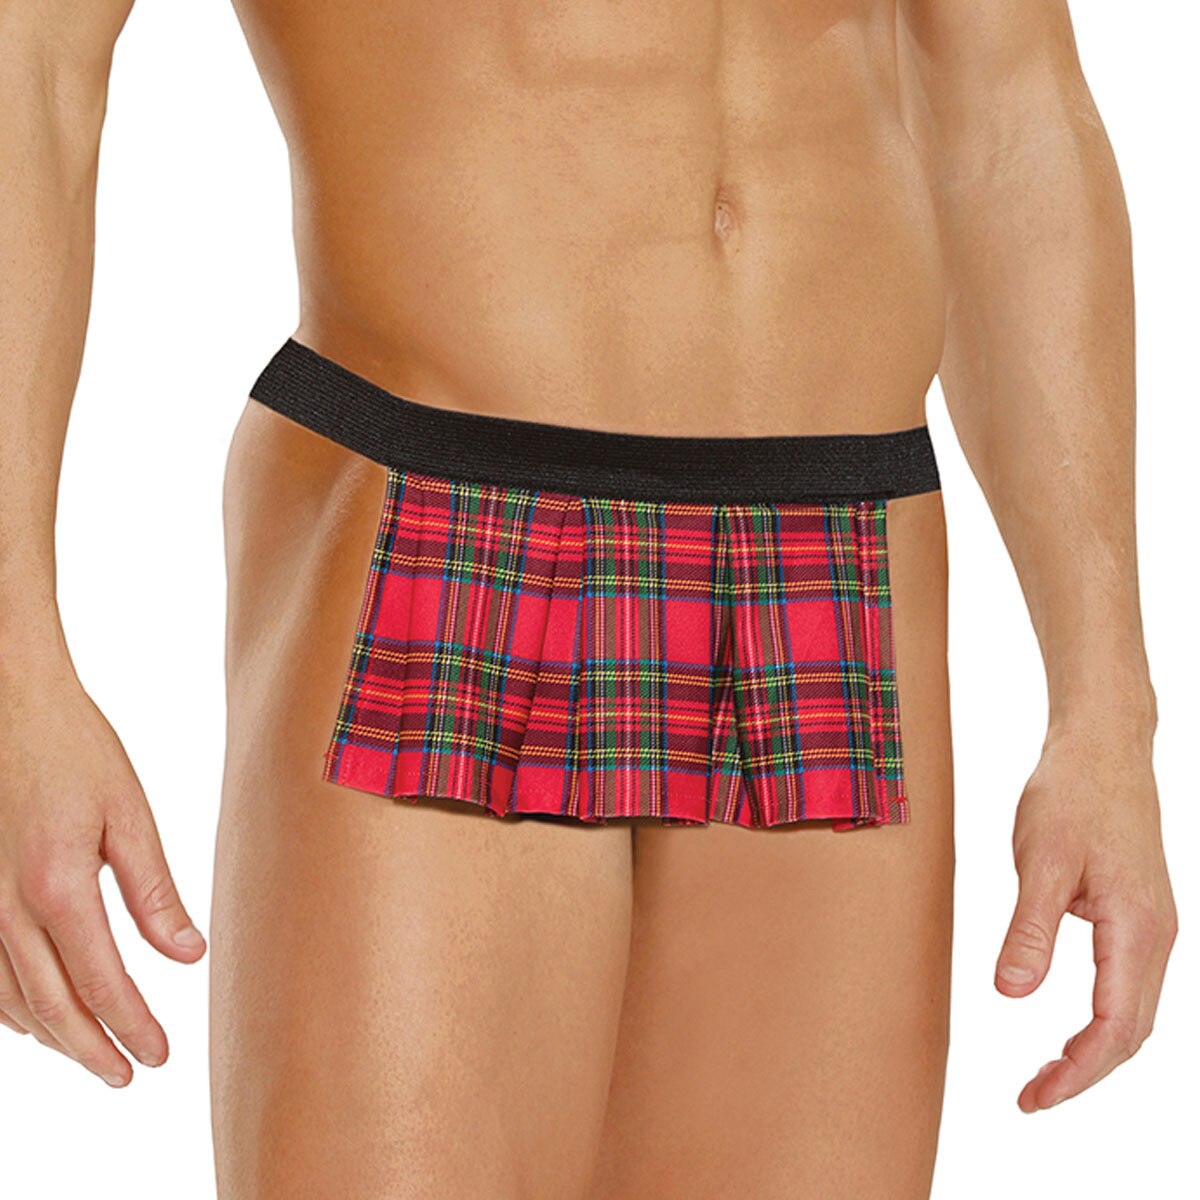 Mens Scottish Kilt G string Thong Underwear